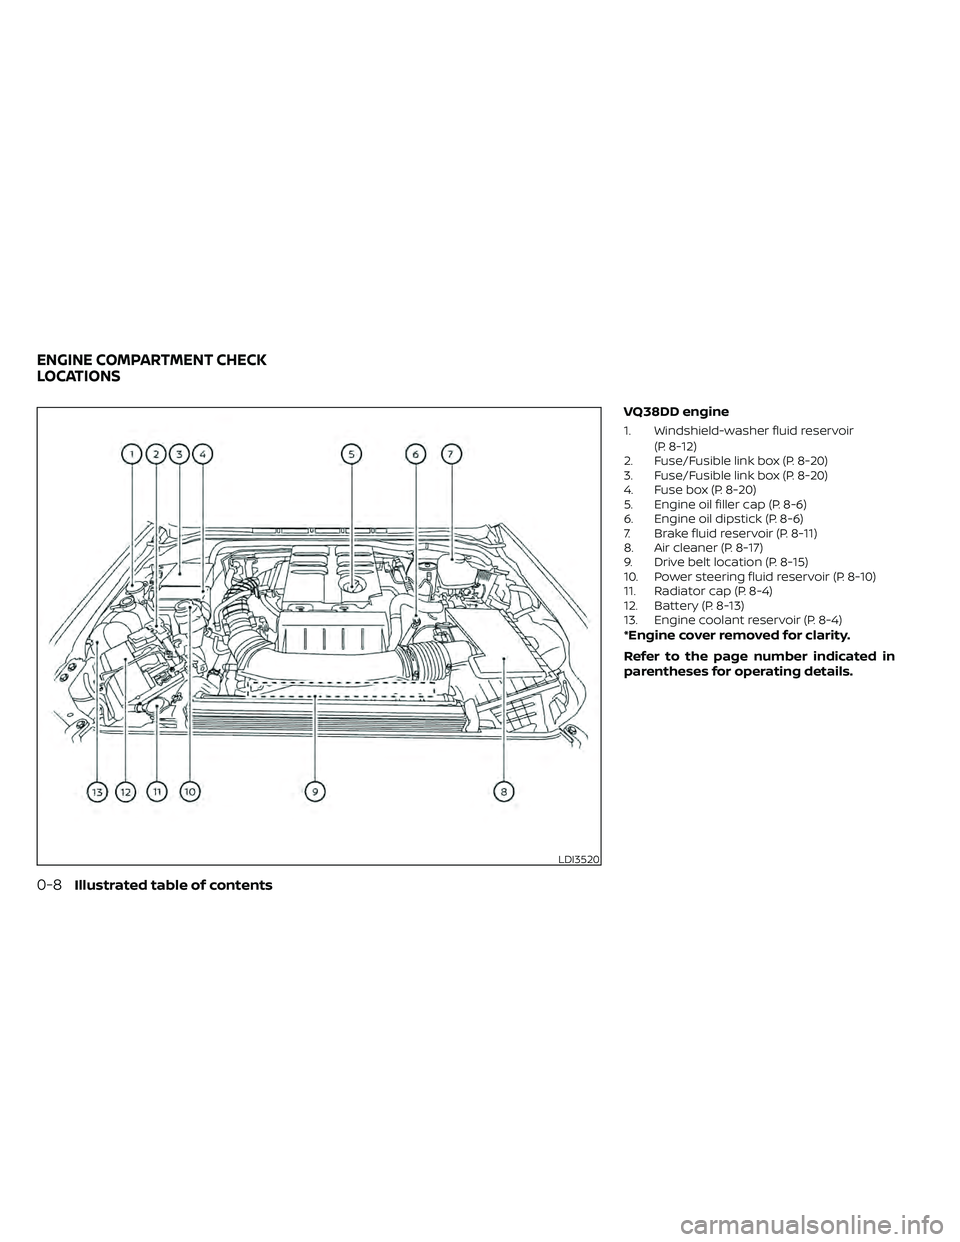 NISSAN FRONTIER 2020  Owner´s Manual VQ38DD engine
1. Windshield-washer fluid reservoir(P. 8-12)
2. Fuse/Fusible link box (P. 8-20)
3. Fuse/Fusible link box (P. 8-20)
4. Fuse box (P. 8-20)
5. Engine oil filler cap (P. 8-6)
6. Engine oil 